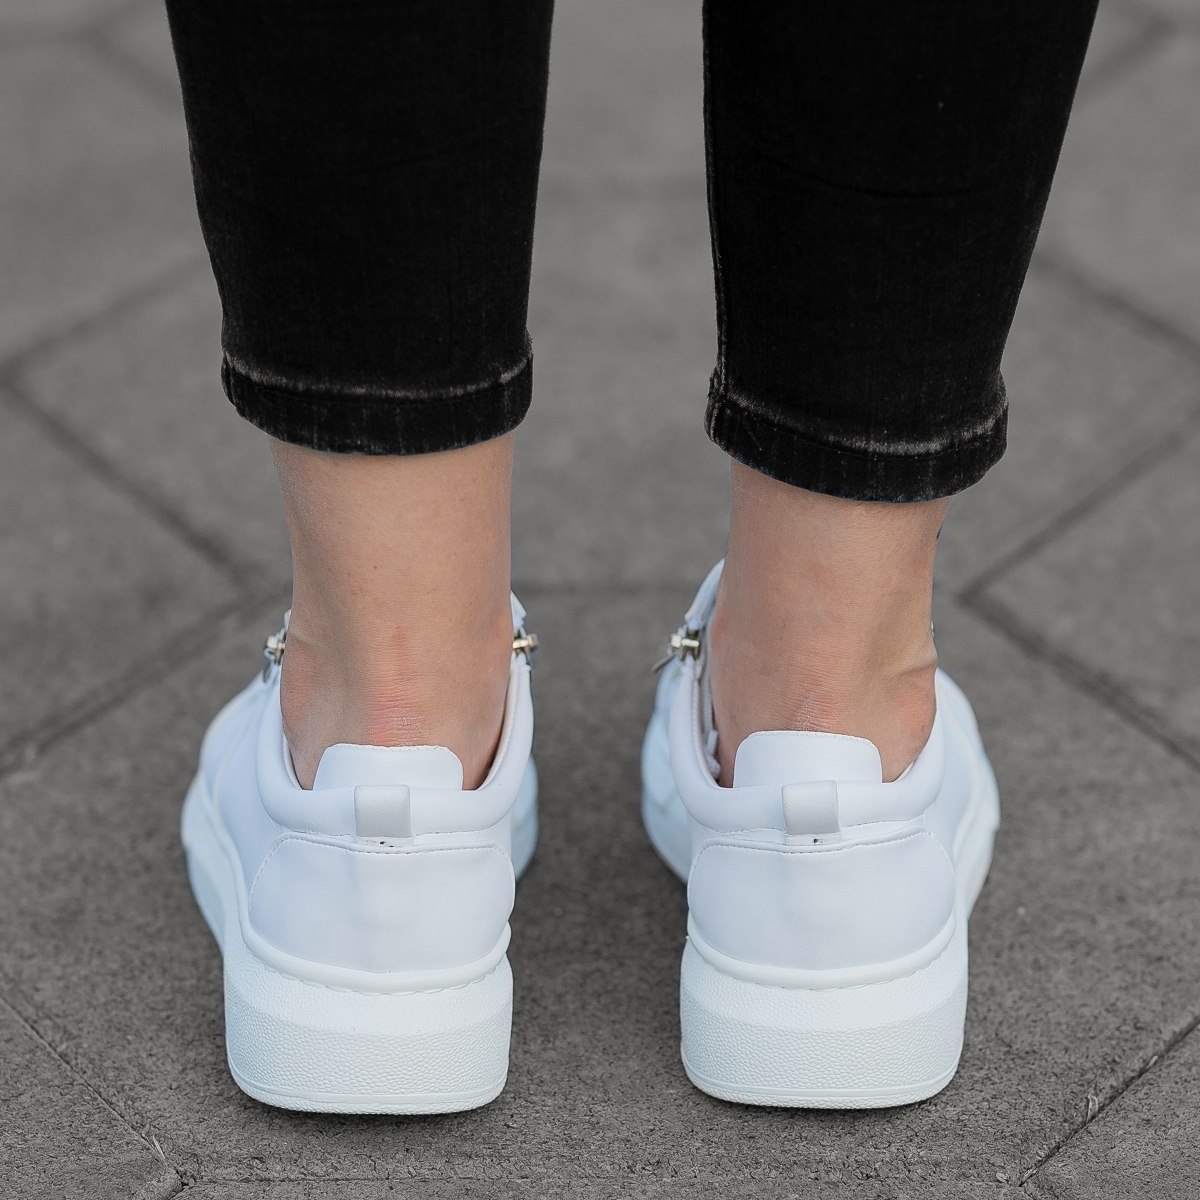 Women's Hype Sole Zipped Style Sneakers in White - 3